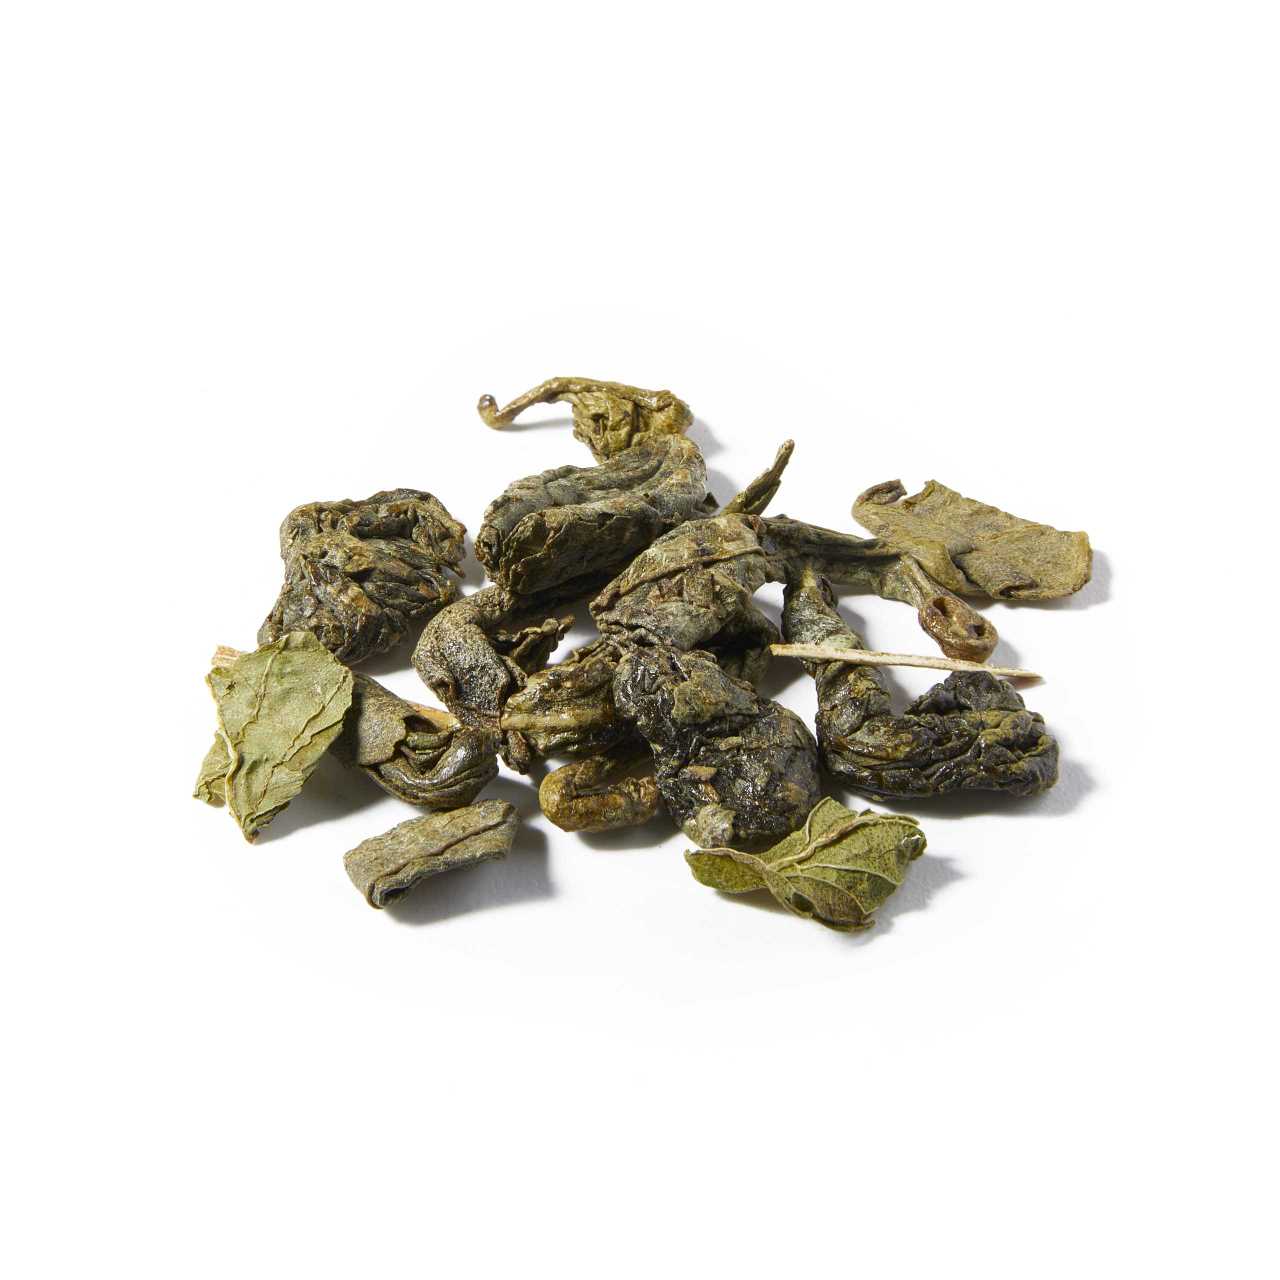 A macro pile of Menthos Gunpowder Loose Leaf Tea